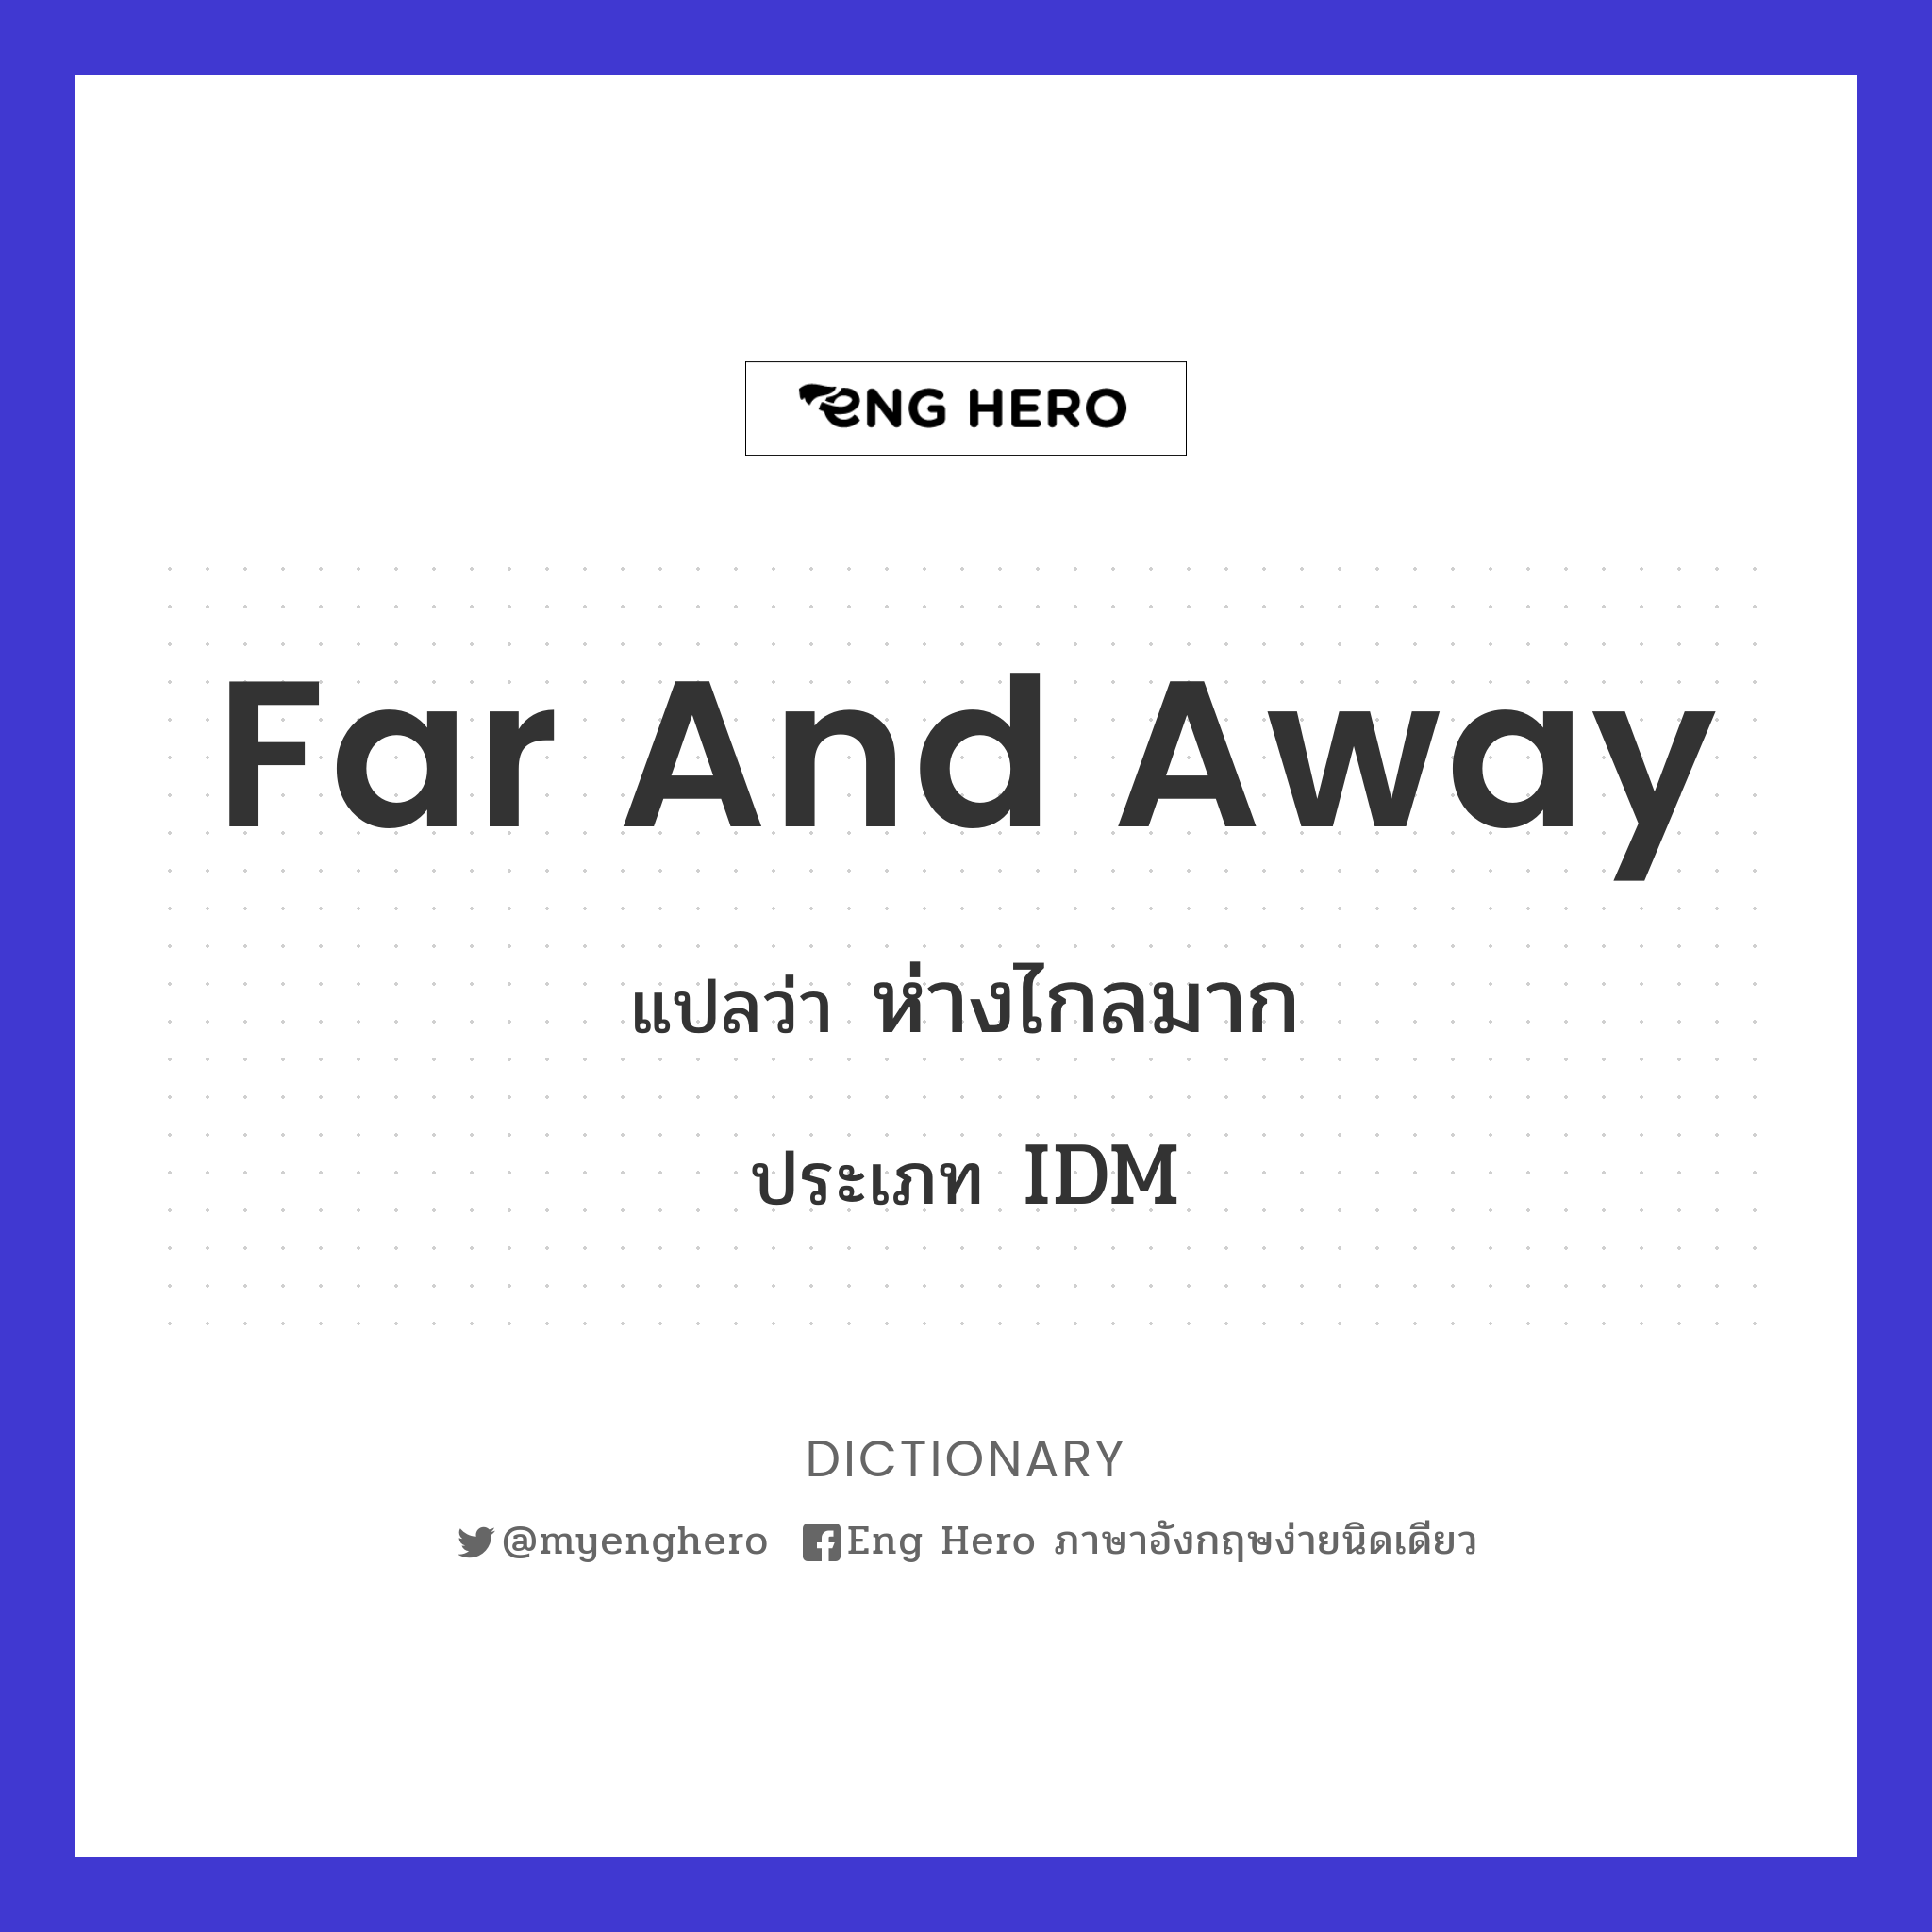 far and away